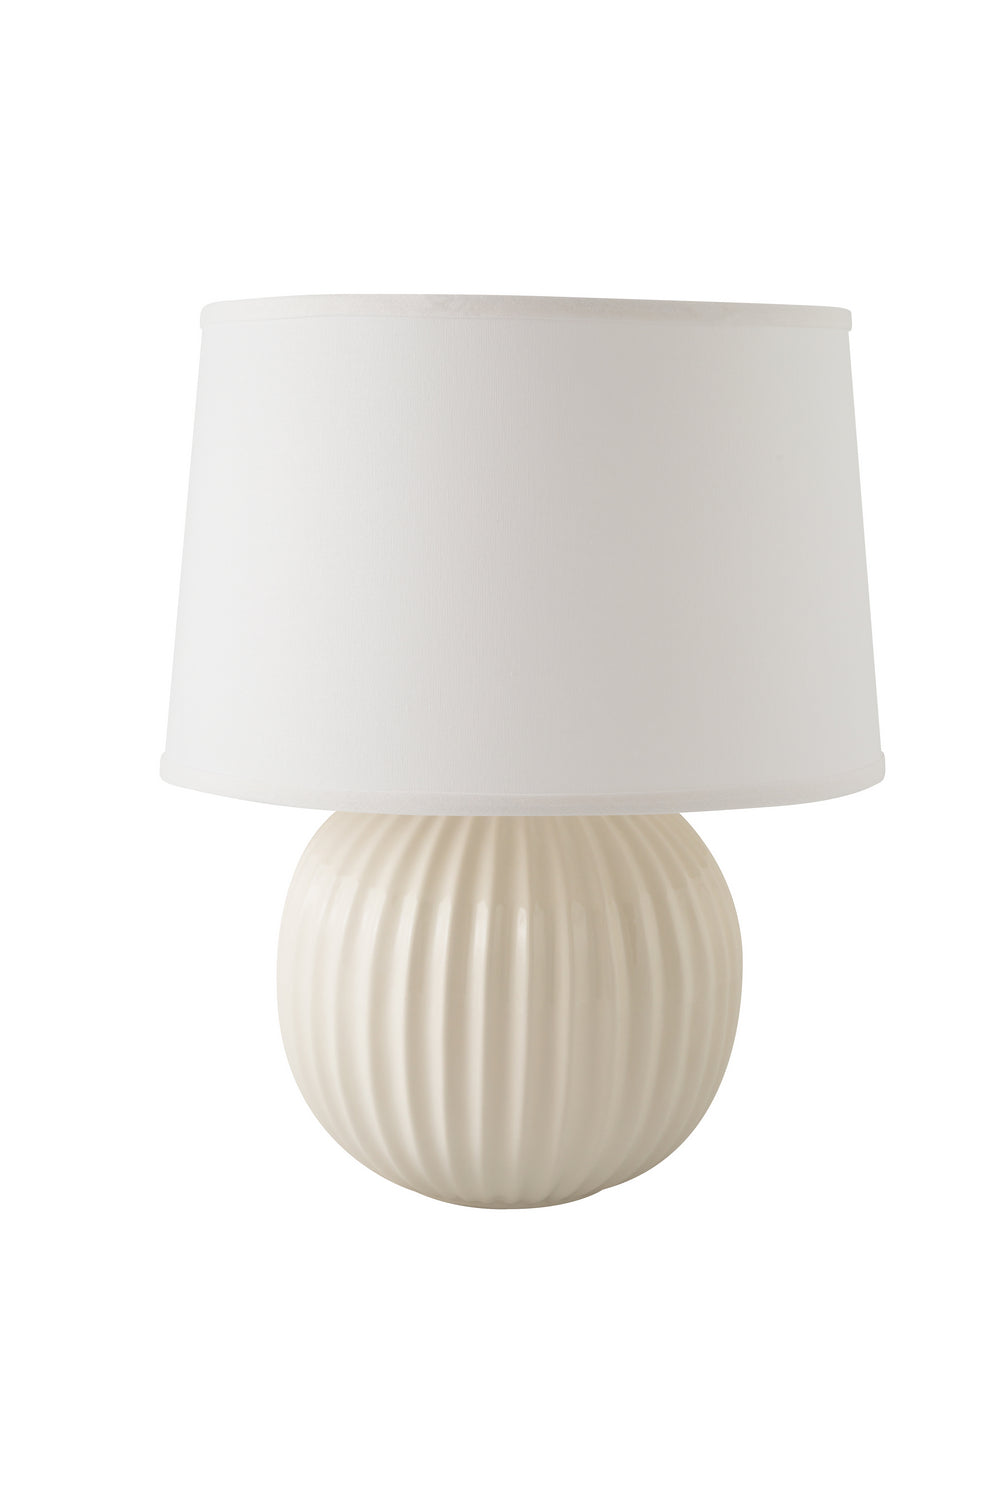 River Ceramic Lighting 347-01 Fluted Round One Light Table Lamp Lamp White